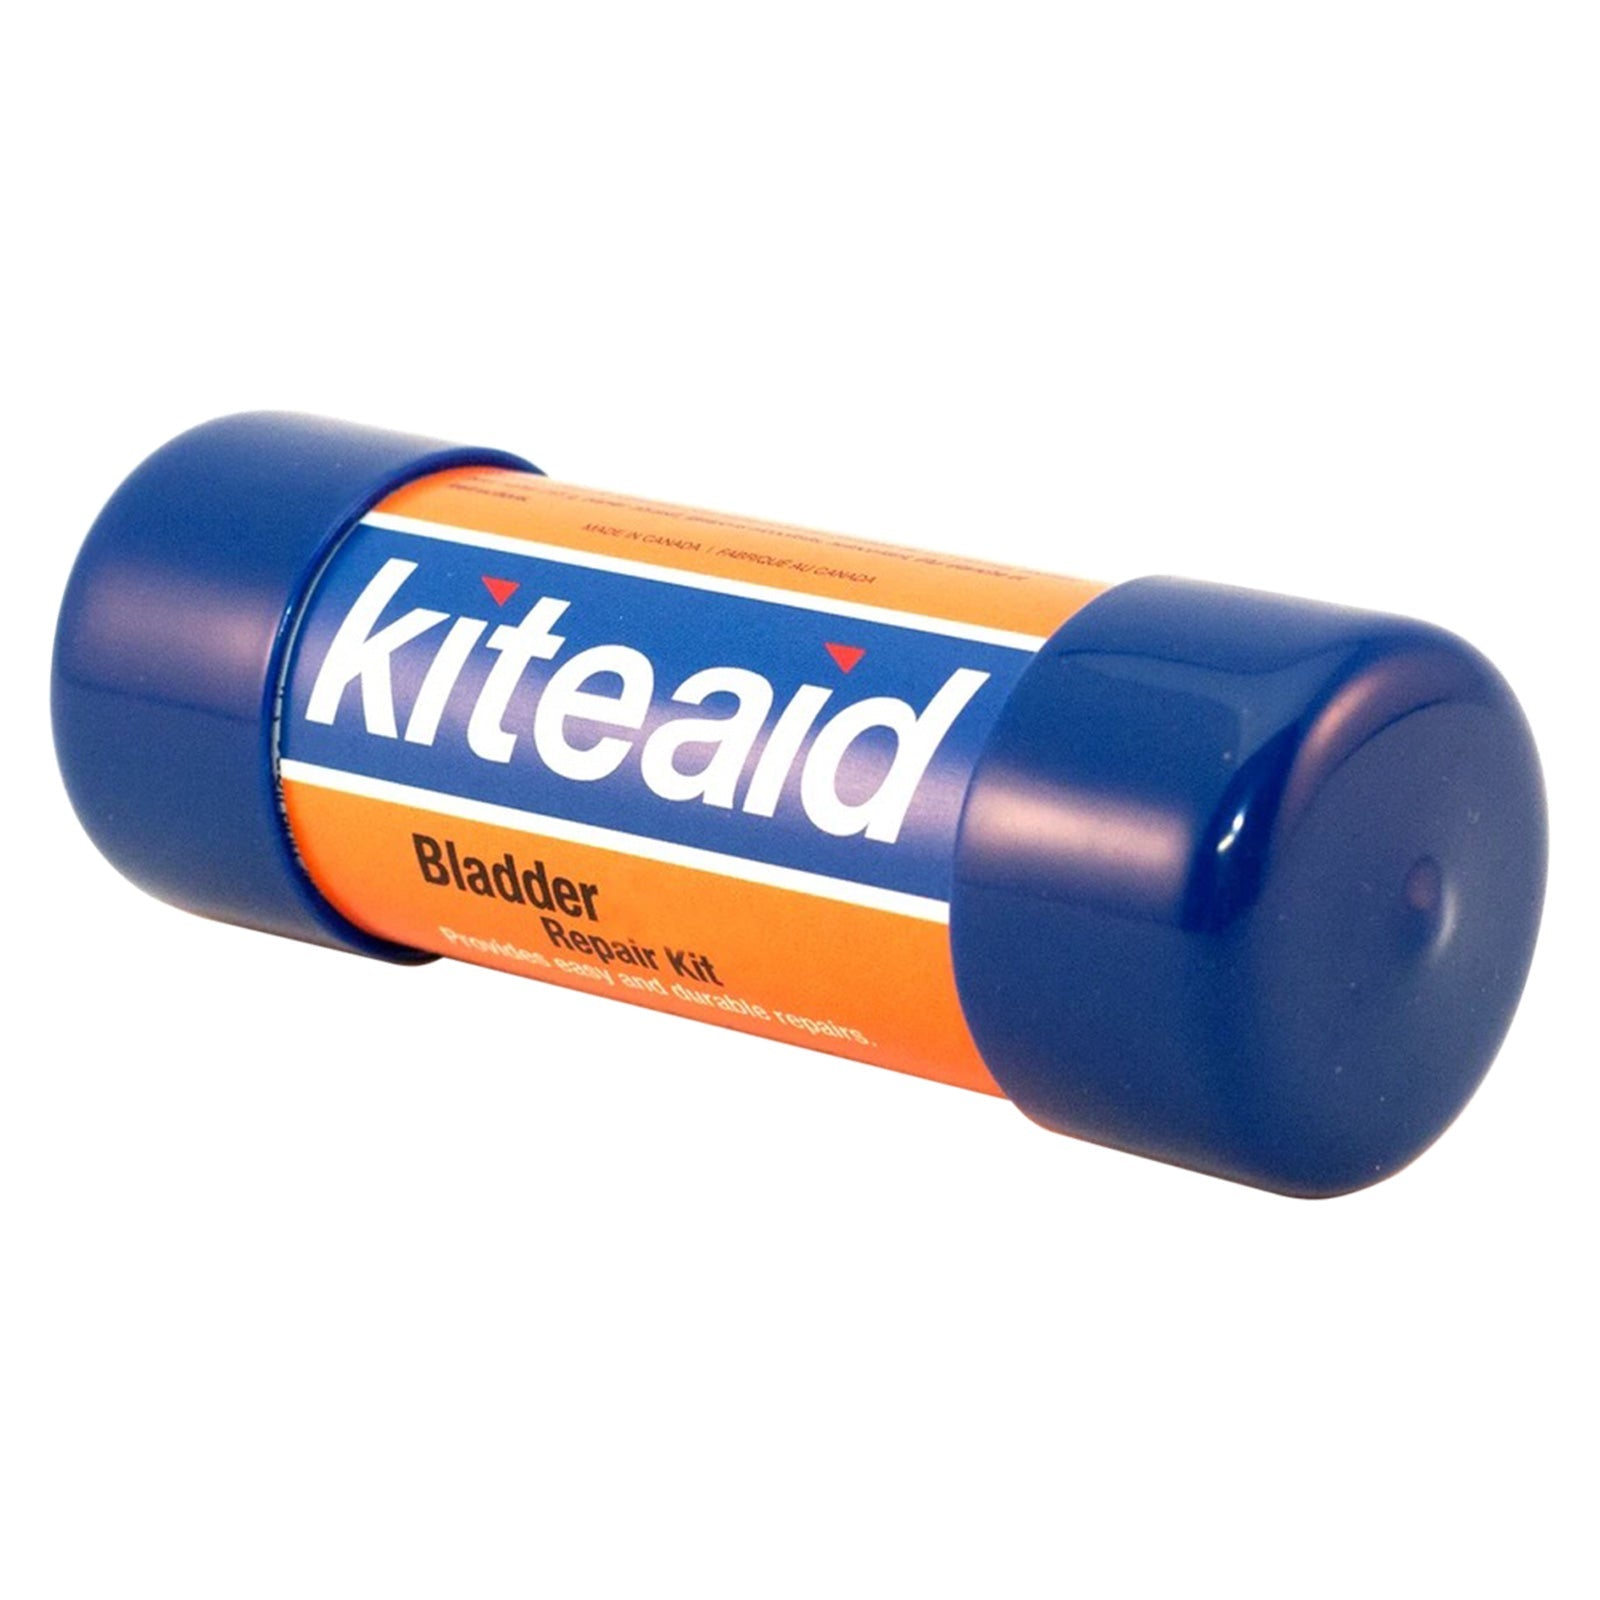 Kiteaid Bladder Repair Kit